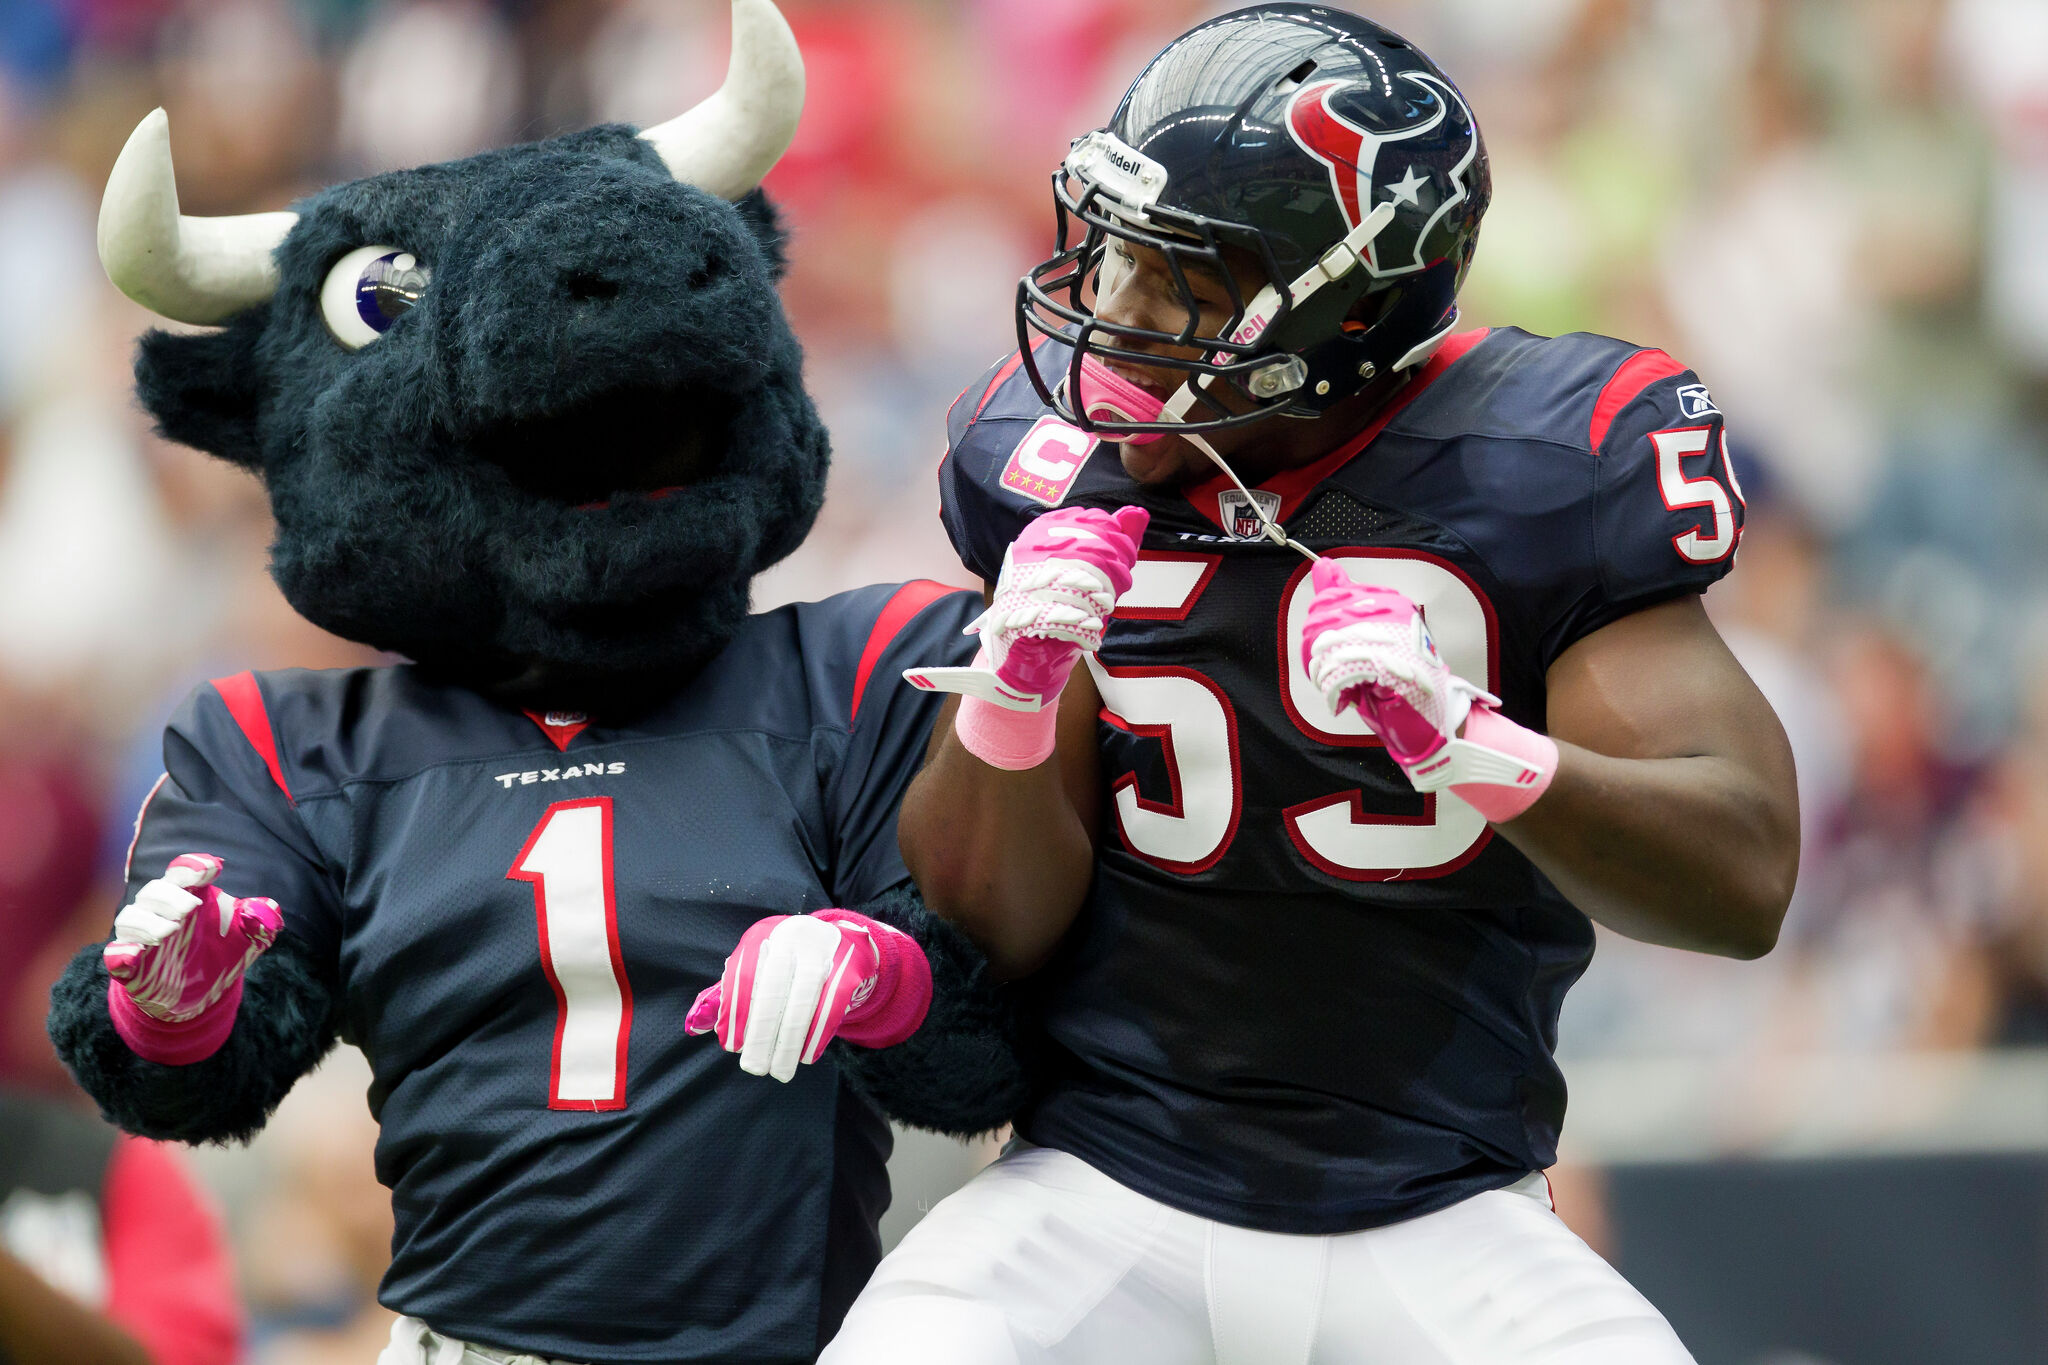 Who is Houston Texans' Mascot Toro?